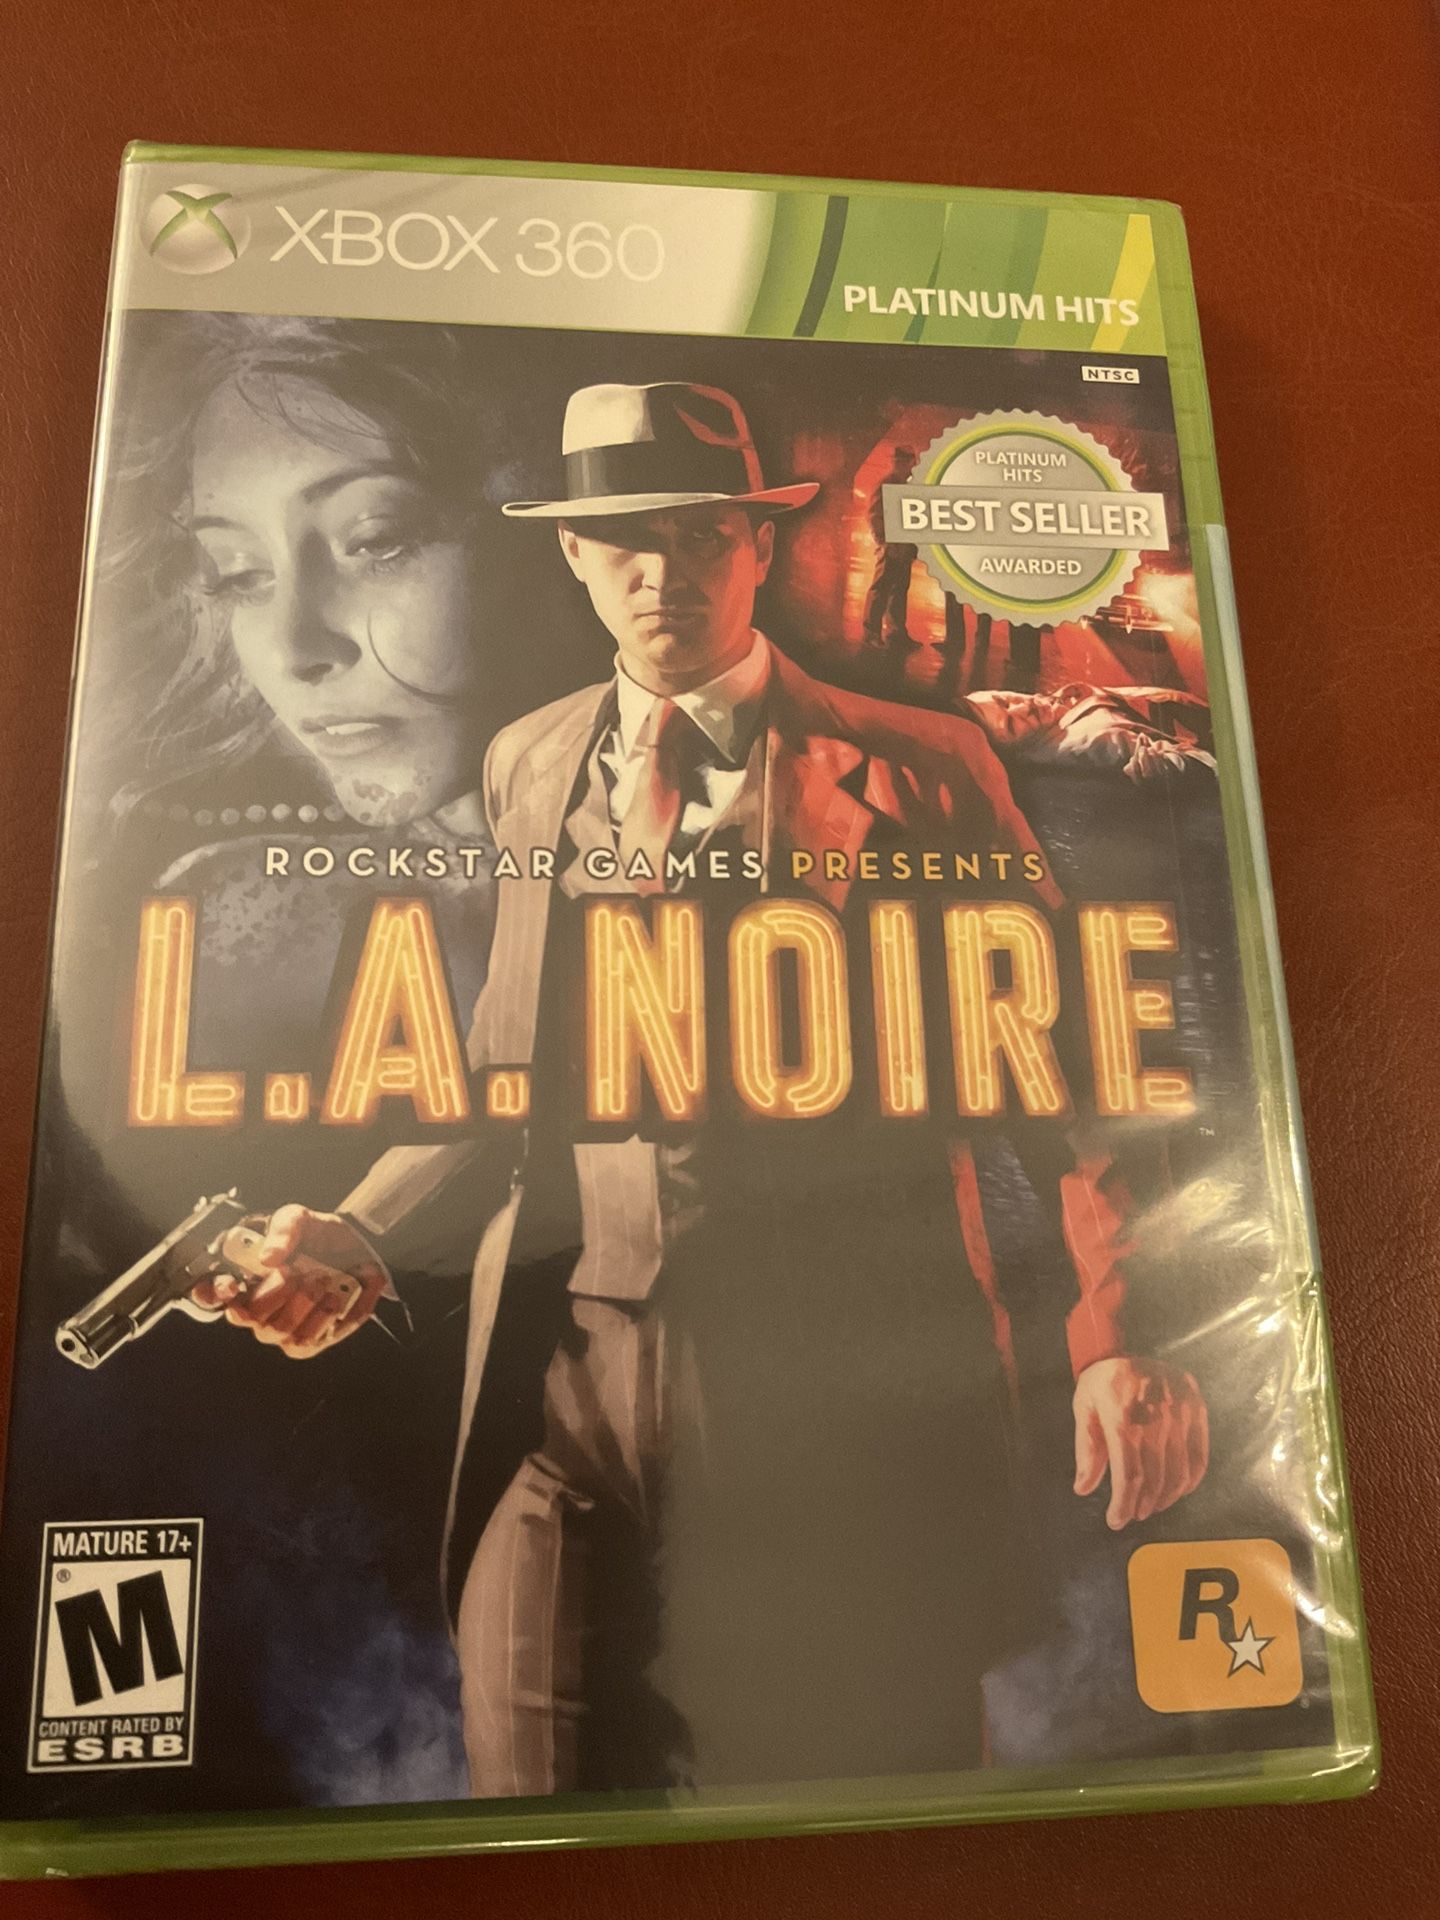 Brand New in Sealed Box L.A. Noire Platinum Edition (Microsoft Xbox 360, 2011) Rockstar Games.